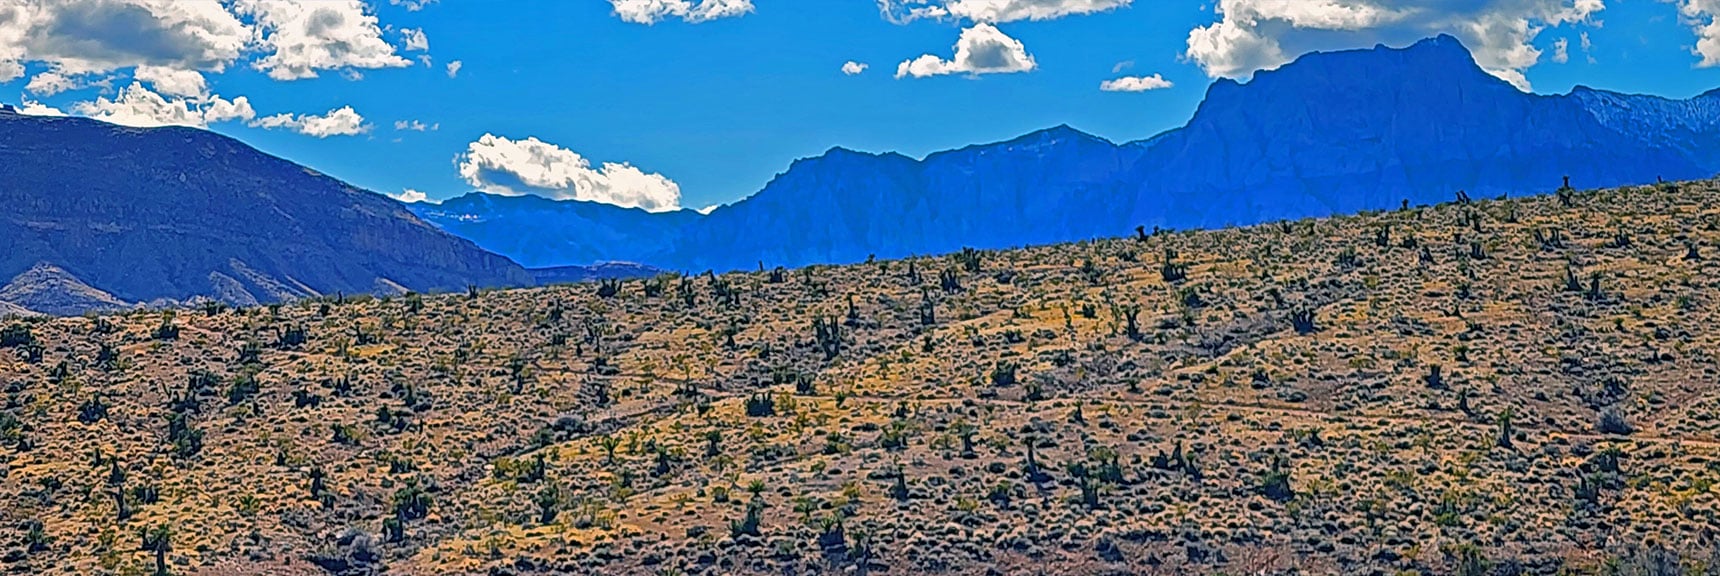 Cross Final Ridge Before Gene's Trailhead | Calico Basin Daily Workout Trails | Calico Basin, Nevada